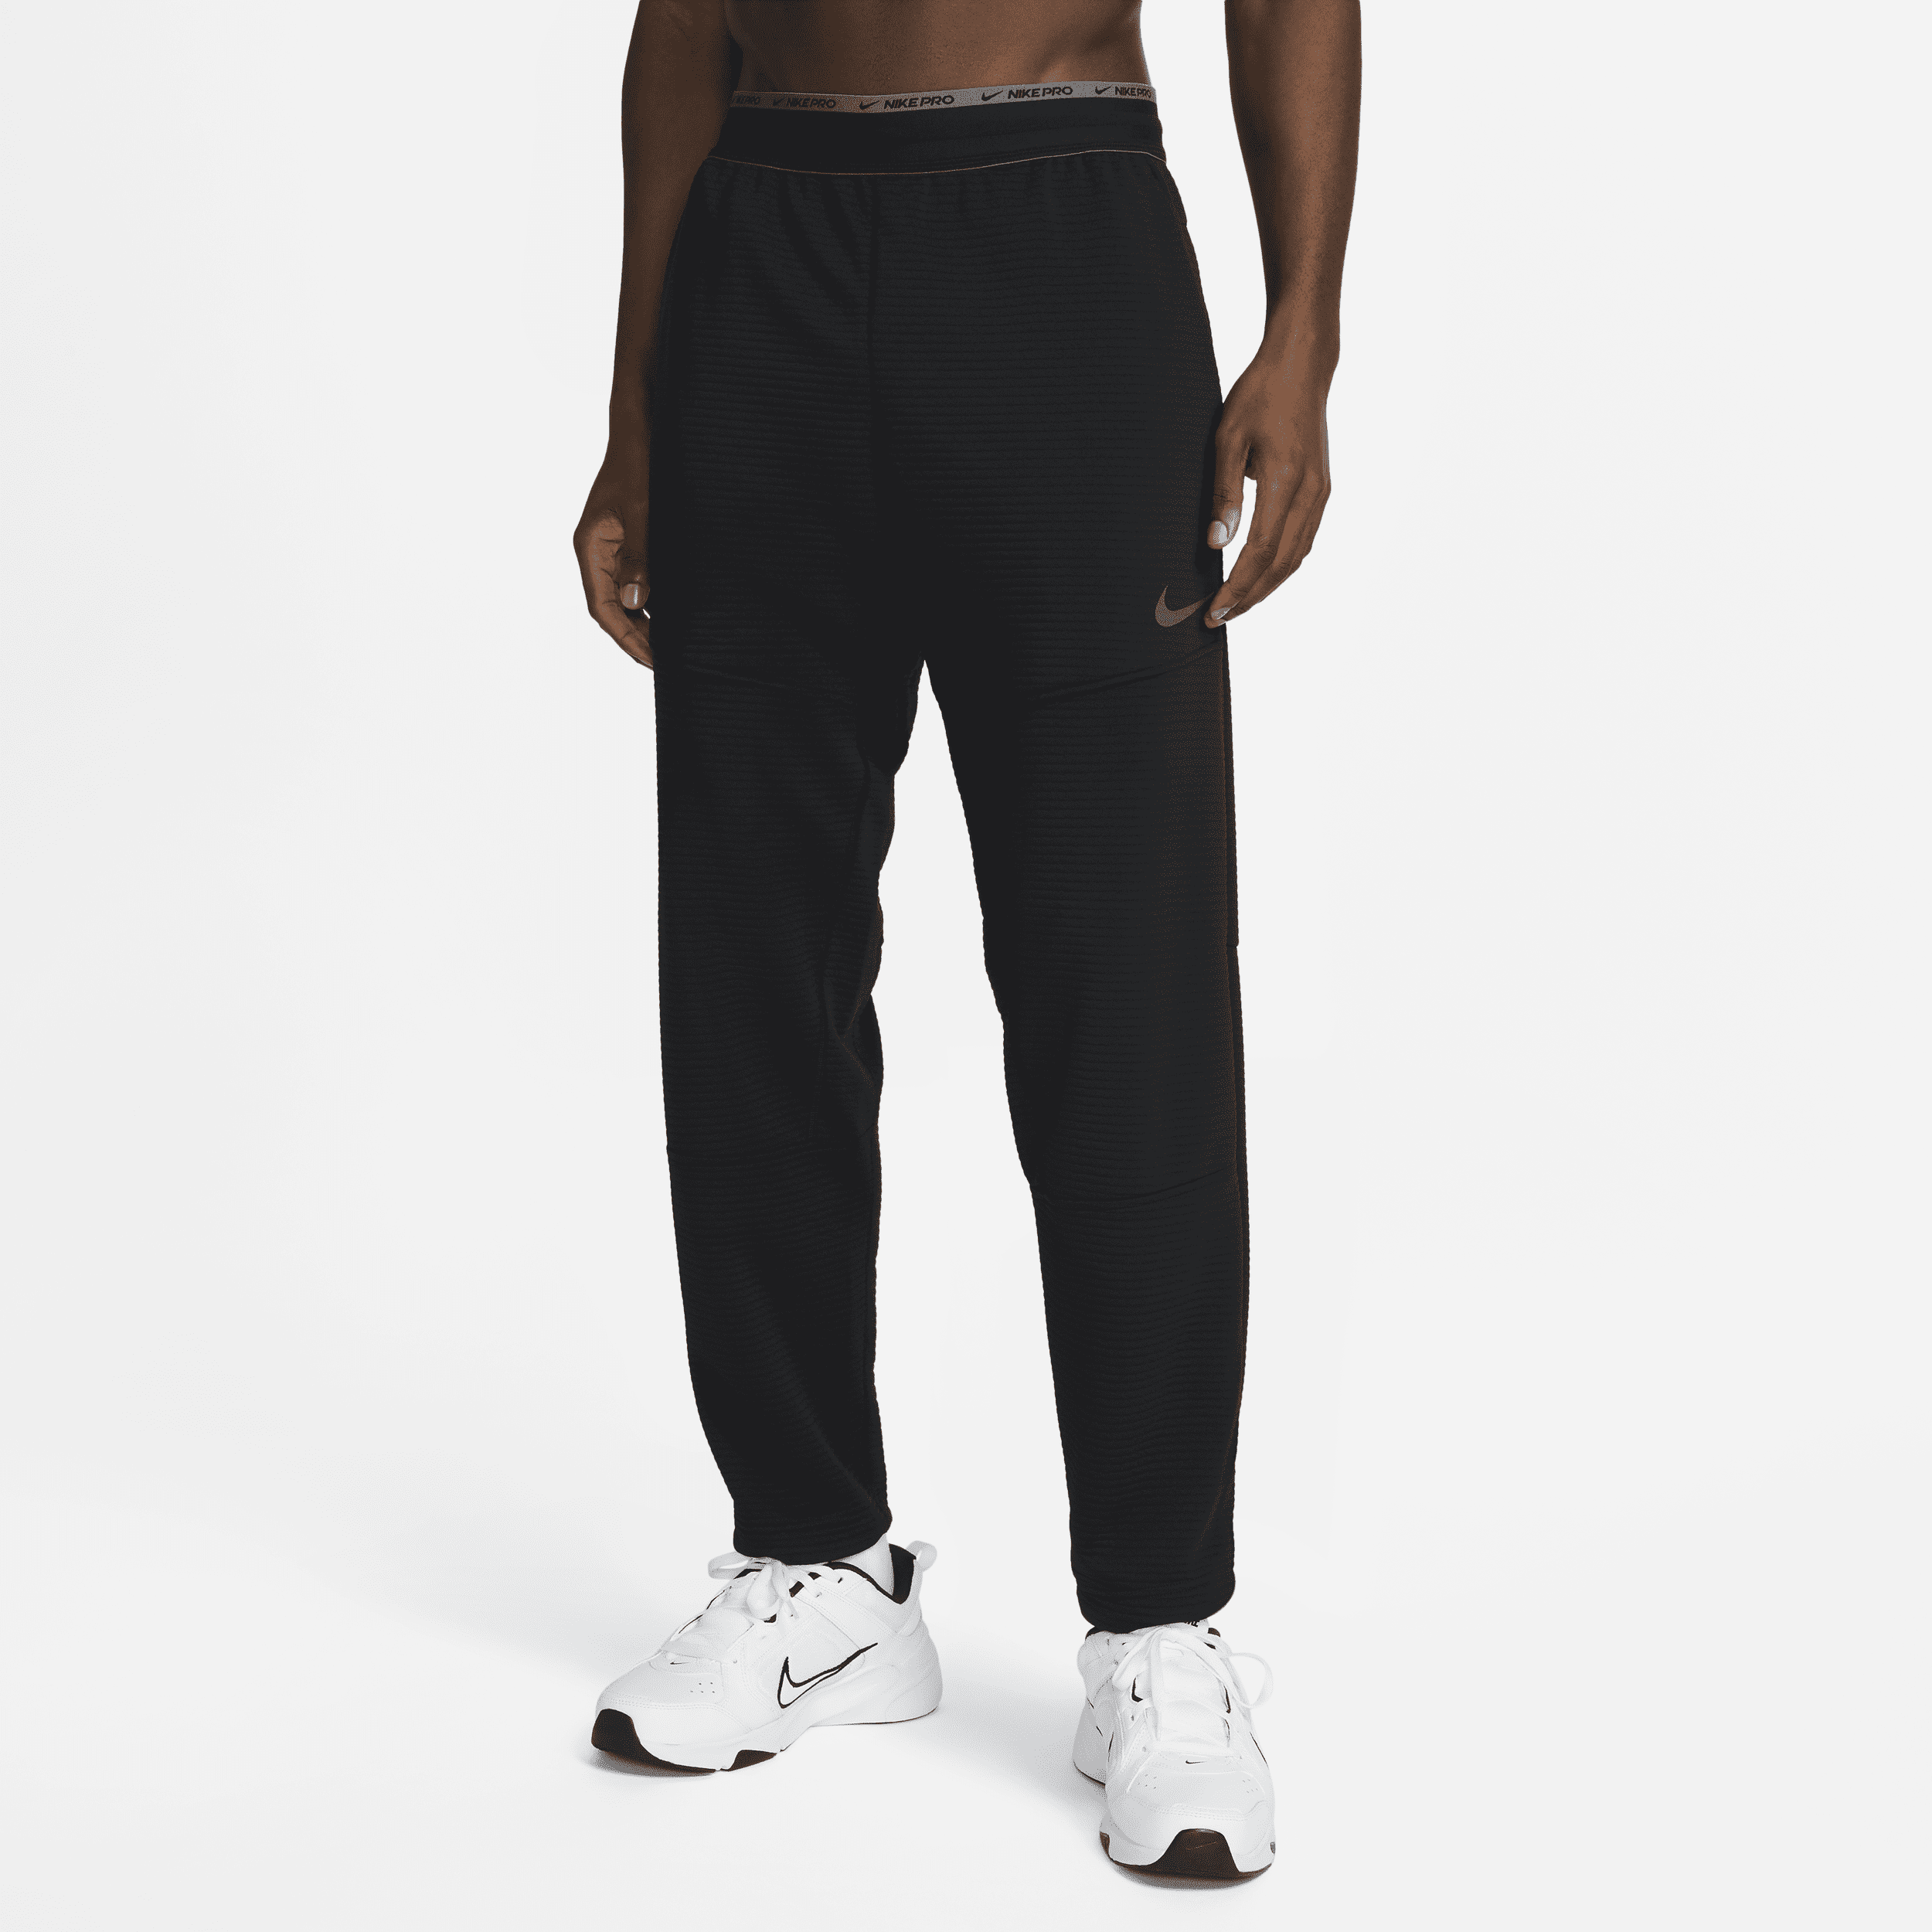 Pantaloni fitness Dri-FIT in fleece Nike – Uomo - Nero